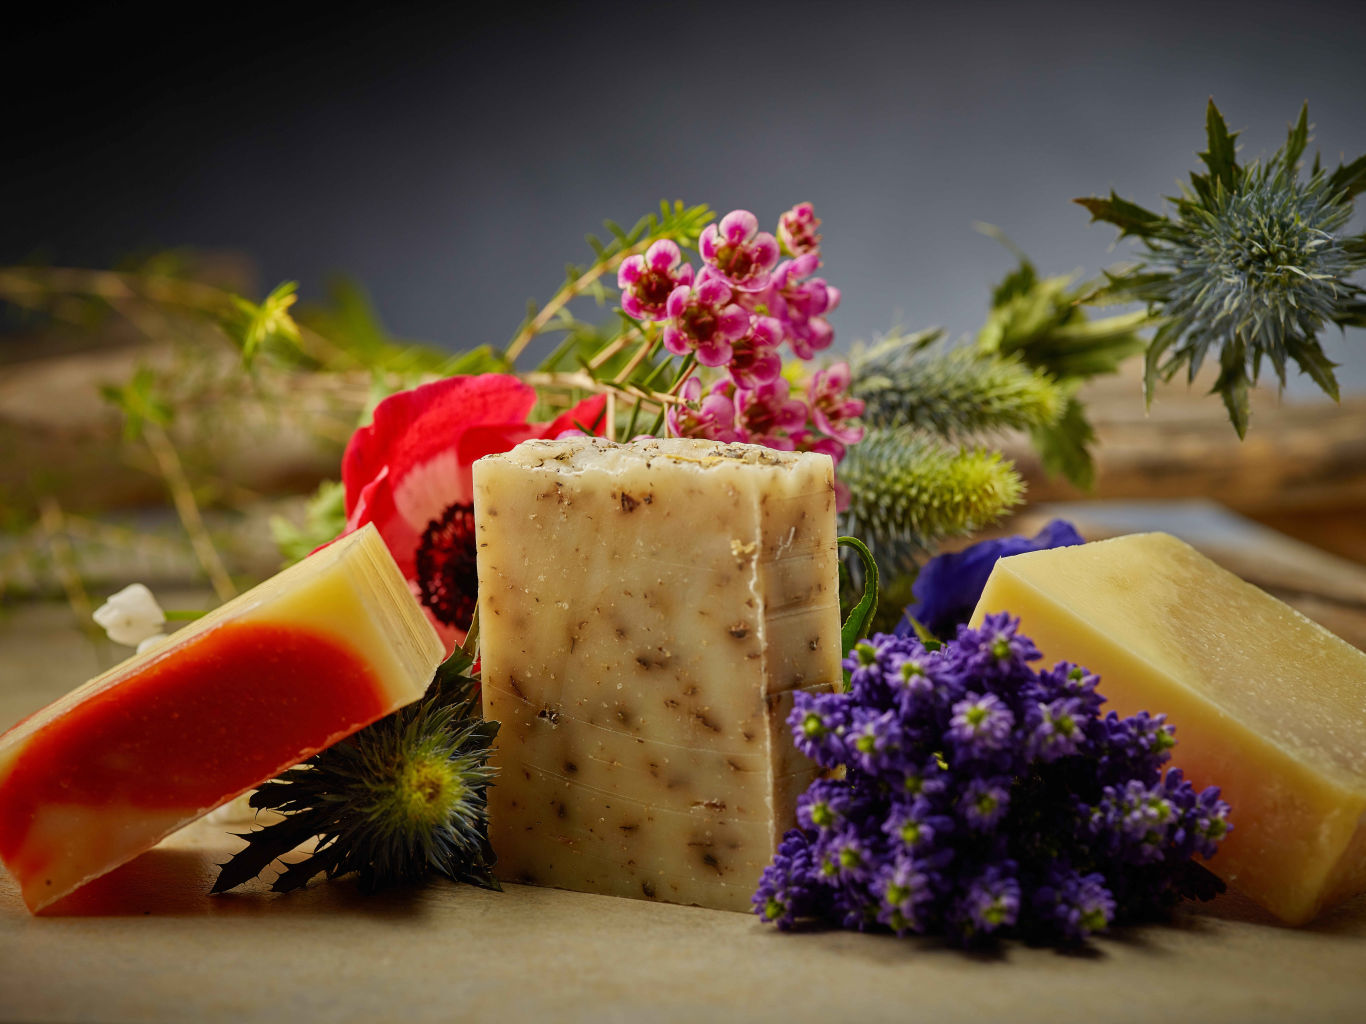 Valais brand soap with apricots, Valais, Switzerland